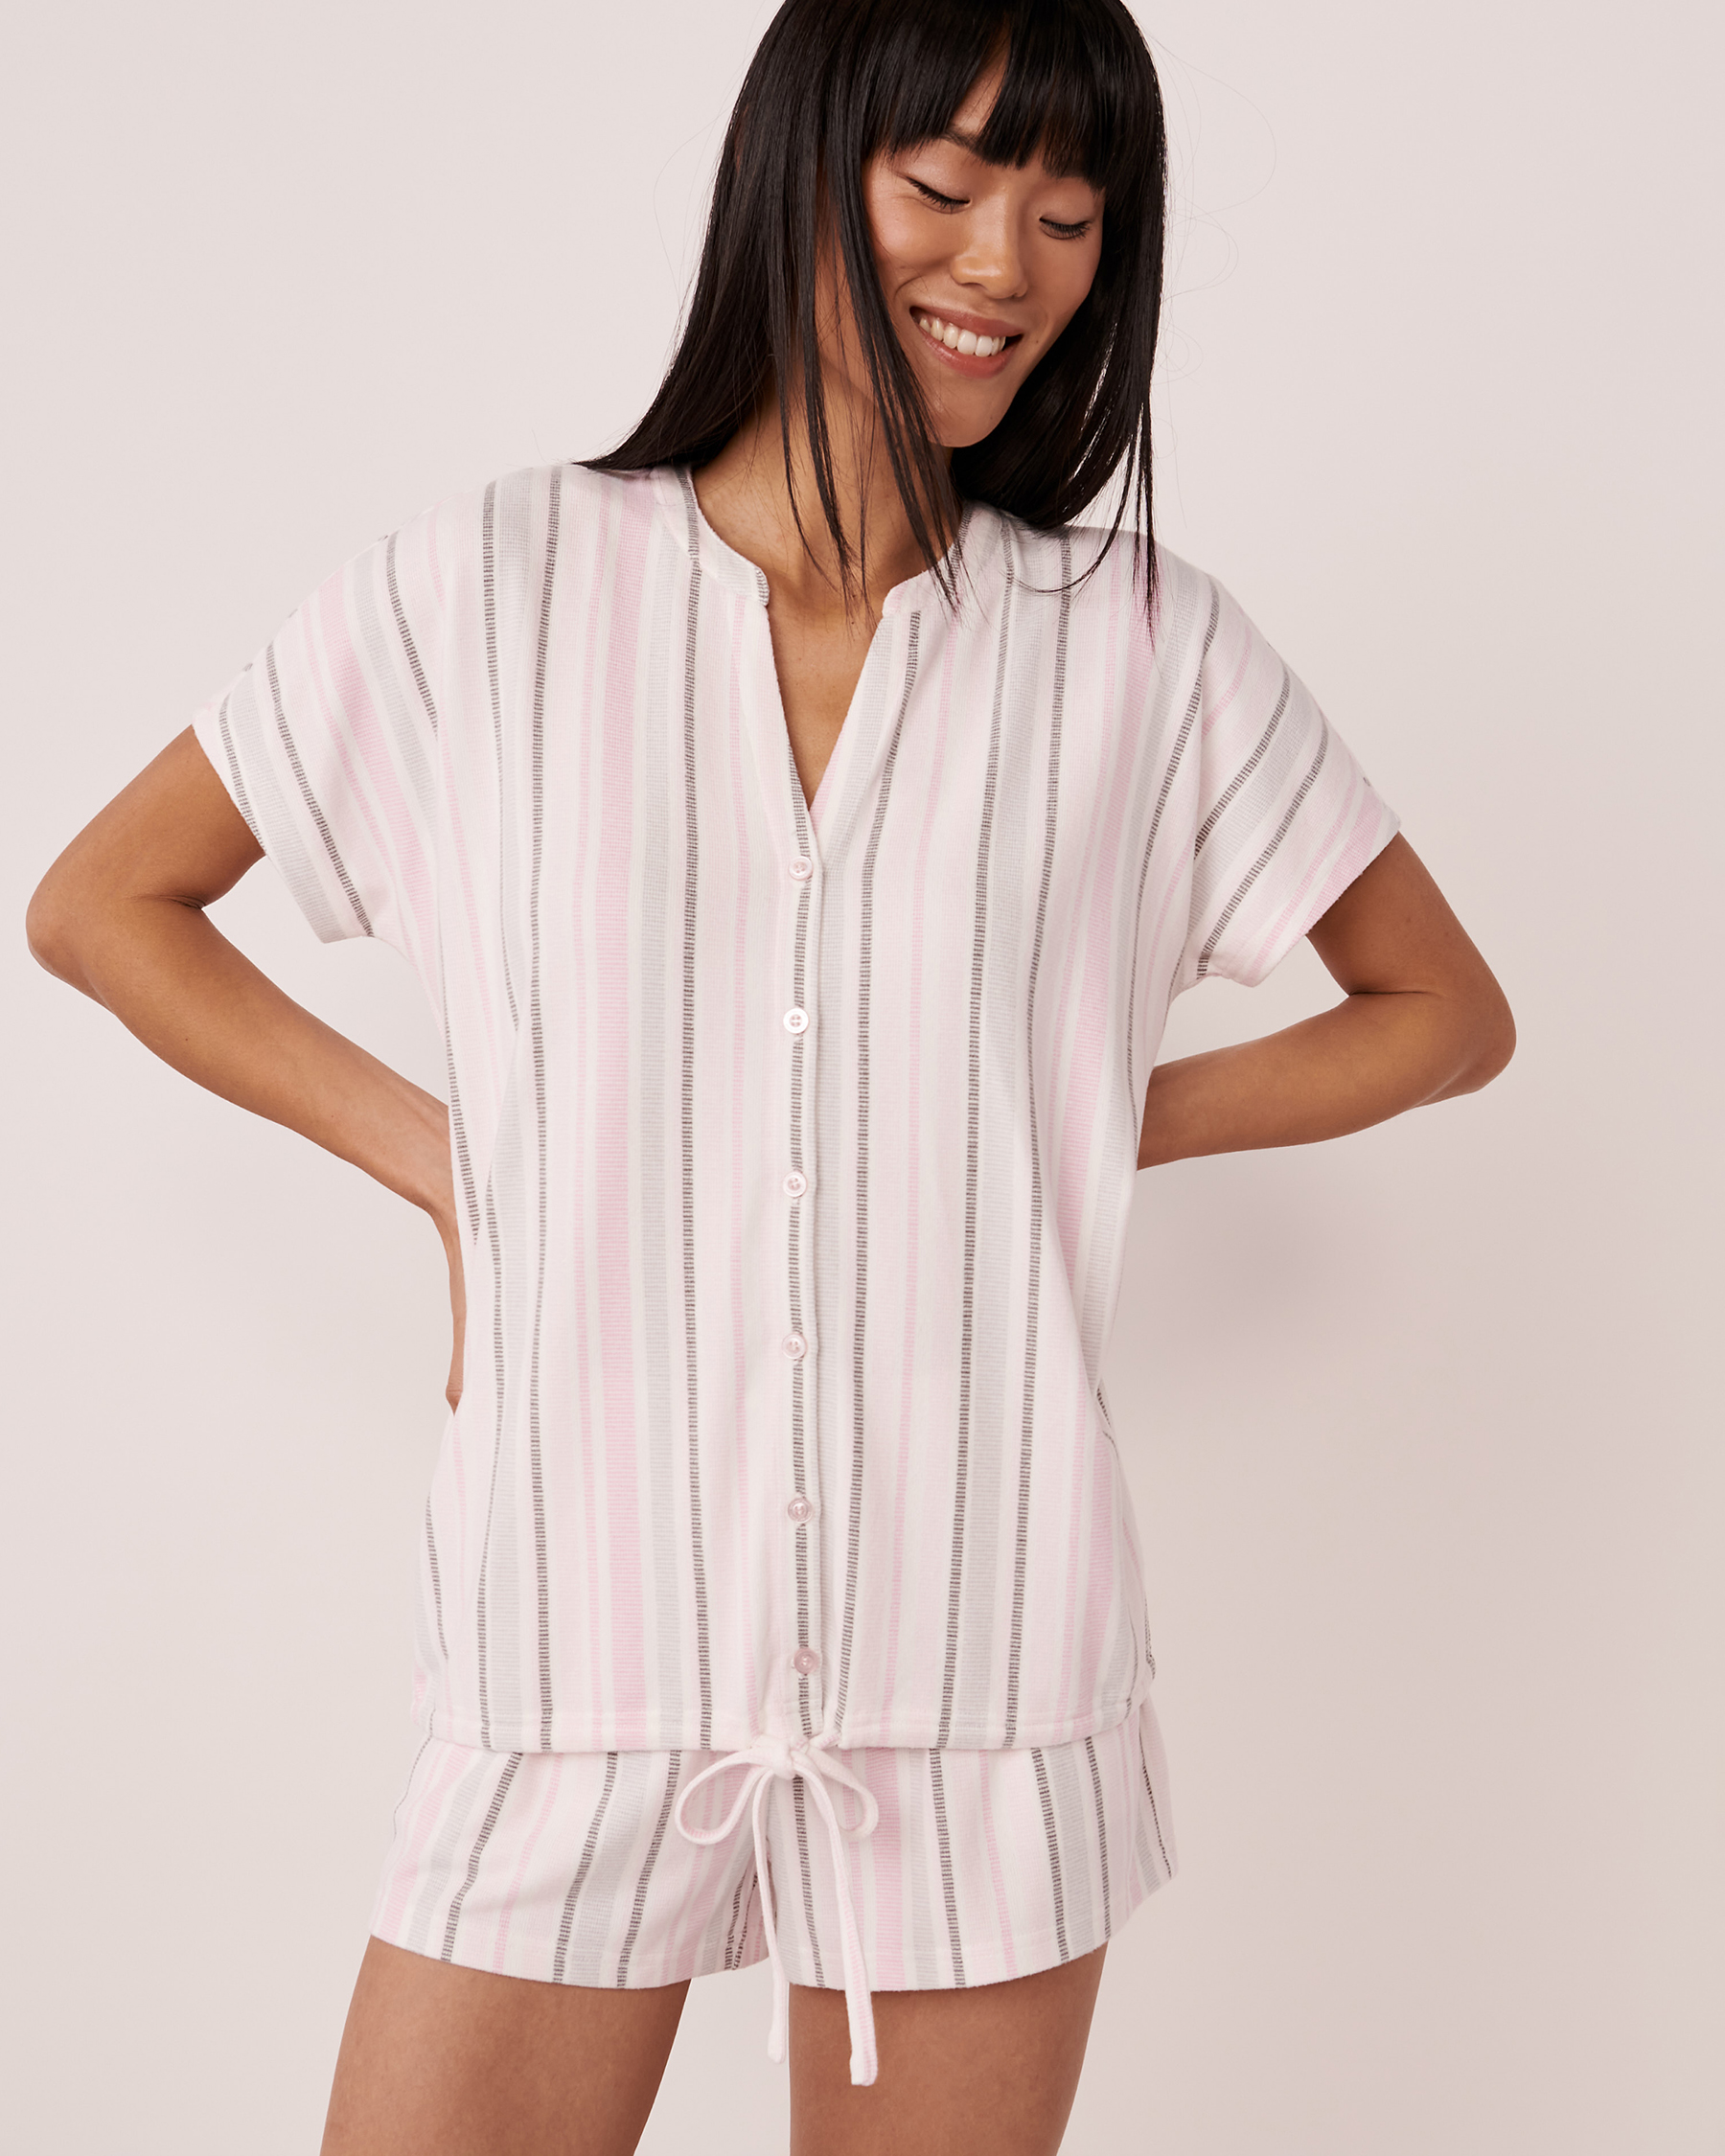 LA VIE EN ROSE Recycled Fibers Short Sleeeve Button-down Shirt Ballerina pink stripes 40100393 - View3